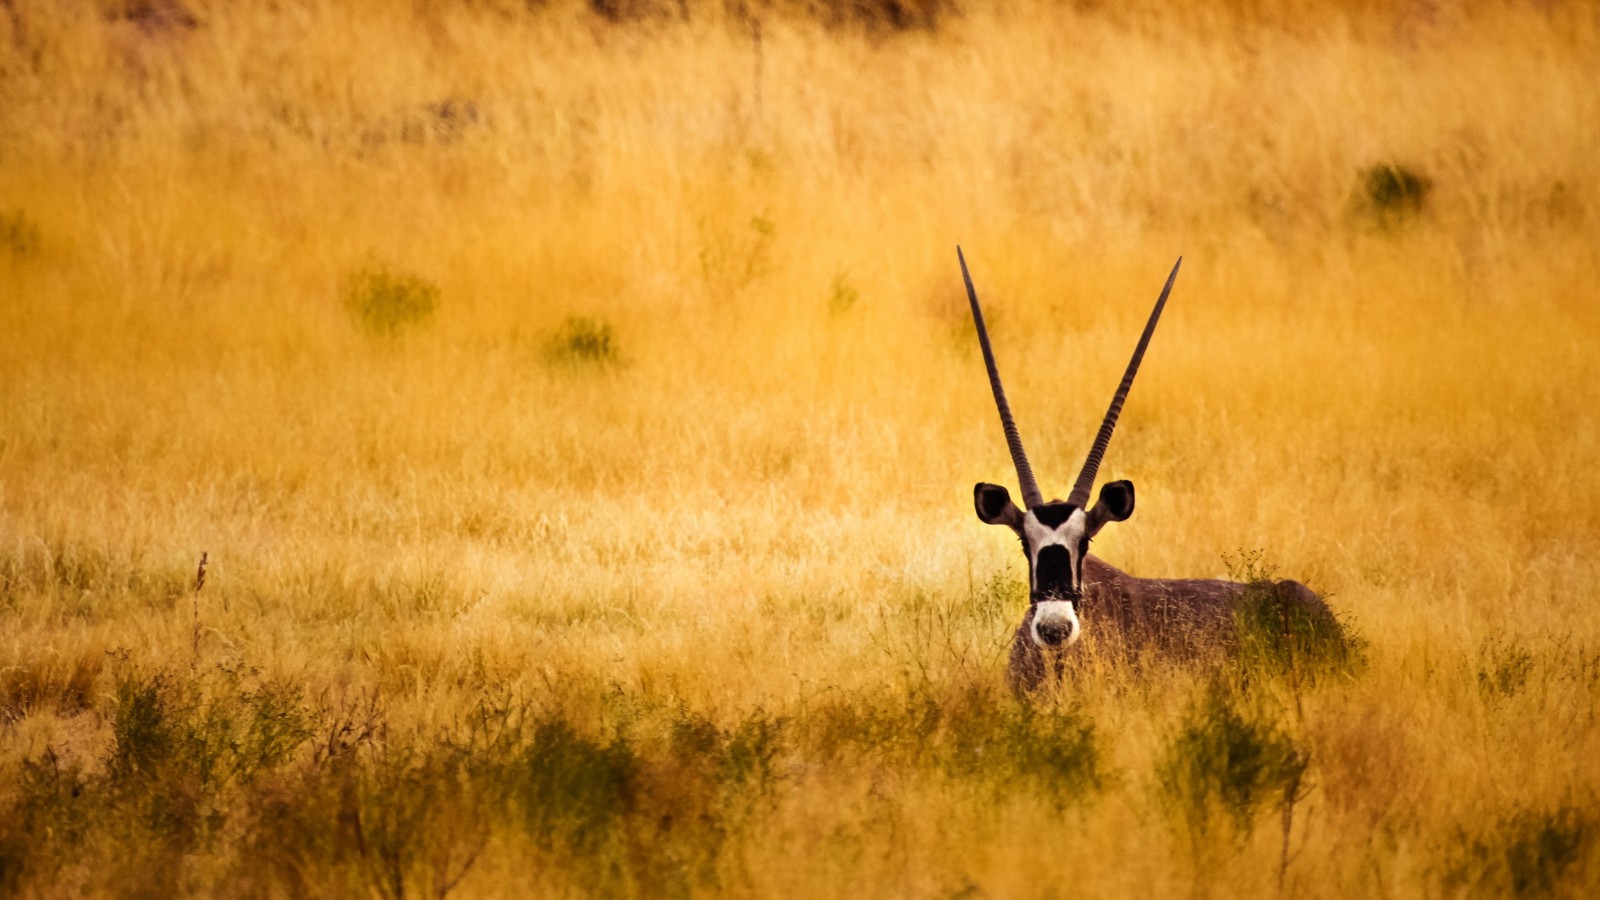 Antelope In The Savanna Wallpaper for Desktop 1600x900